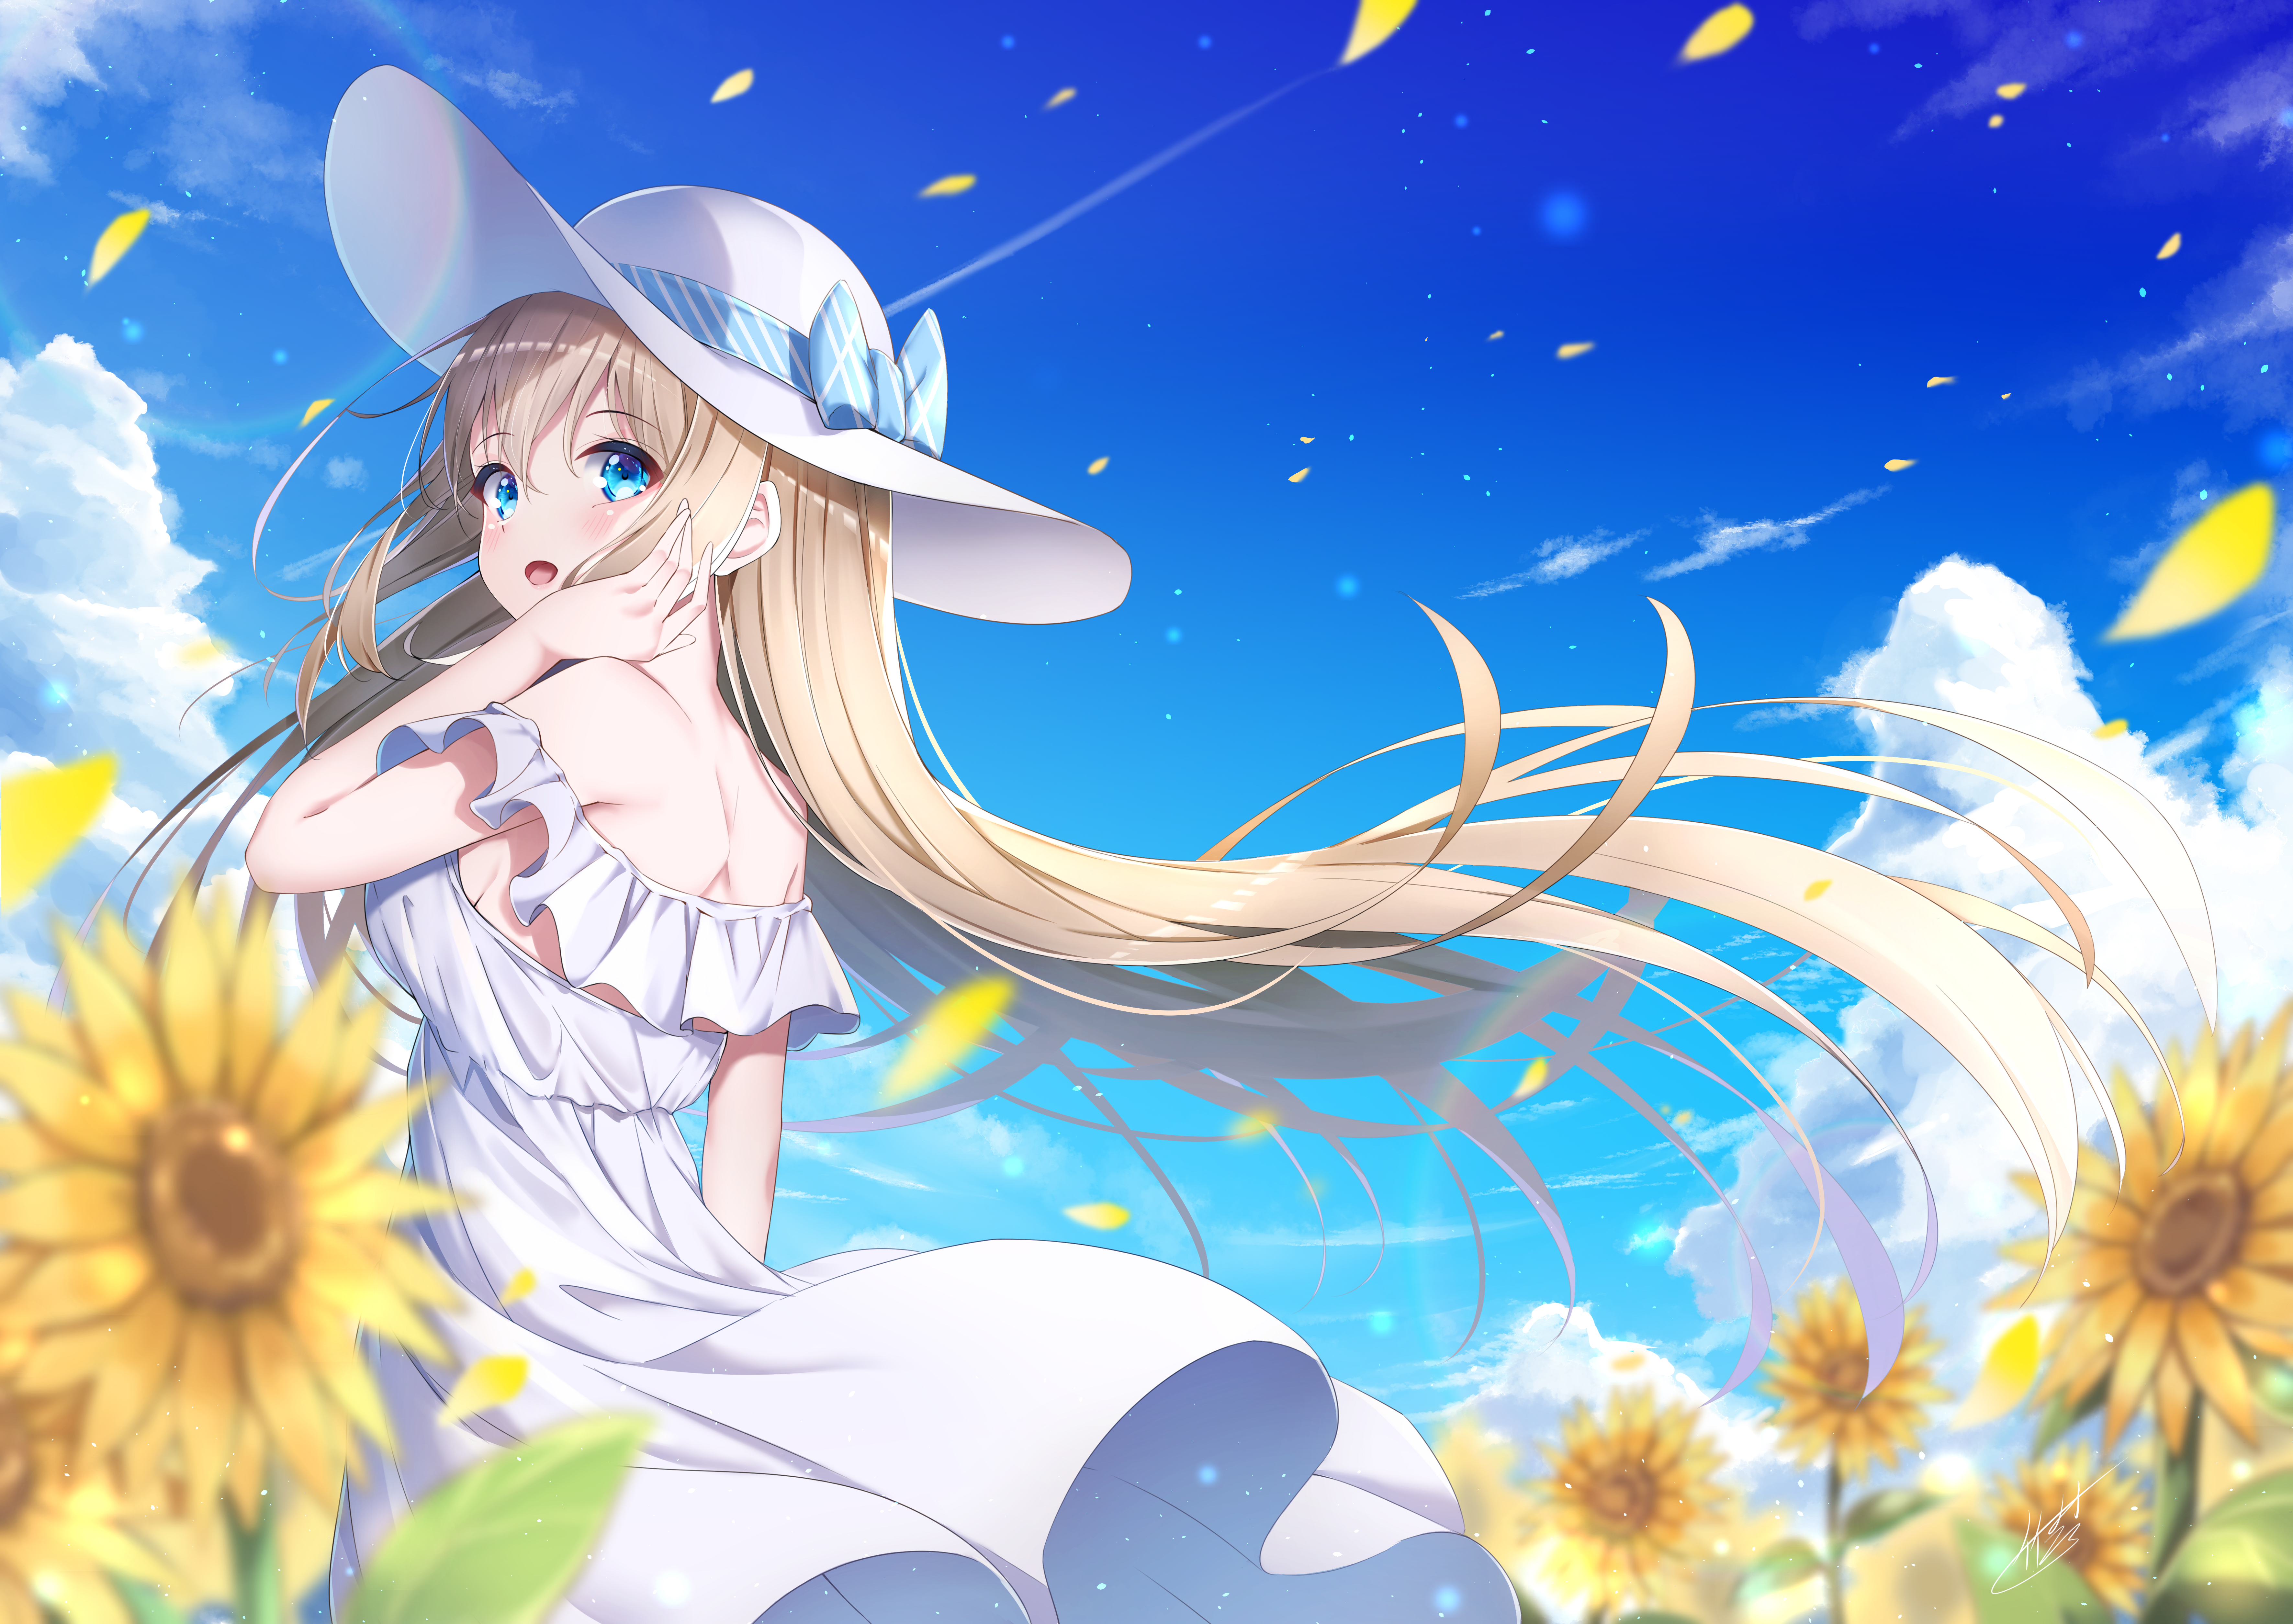 Anime 7083x5016 anime anime girls Kou Takemura artwork blonde long hair hat dress sun dress sunflowers petals standing